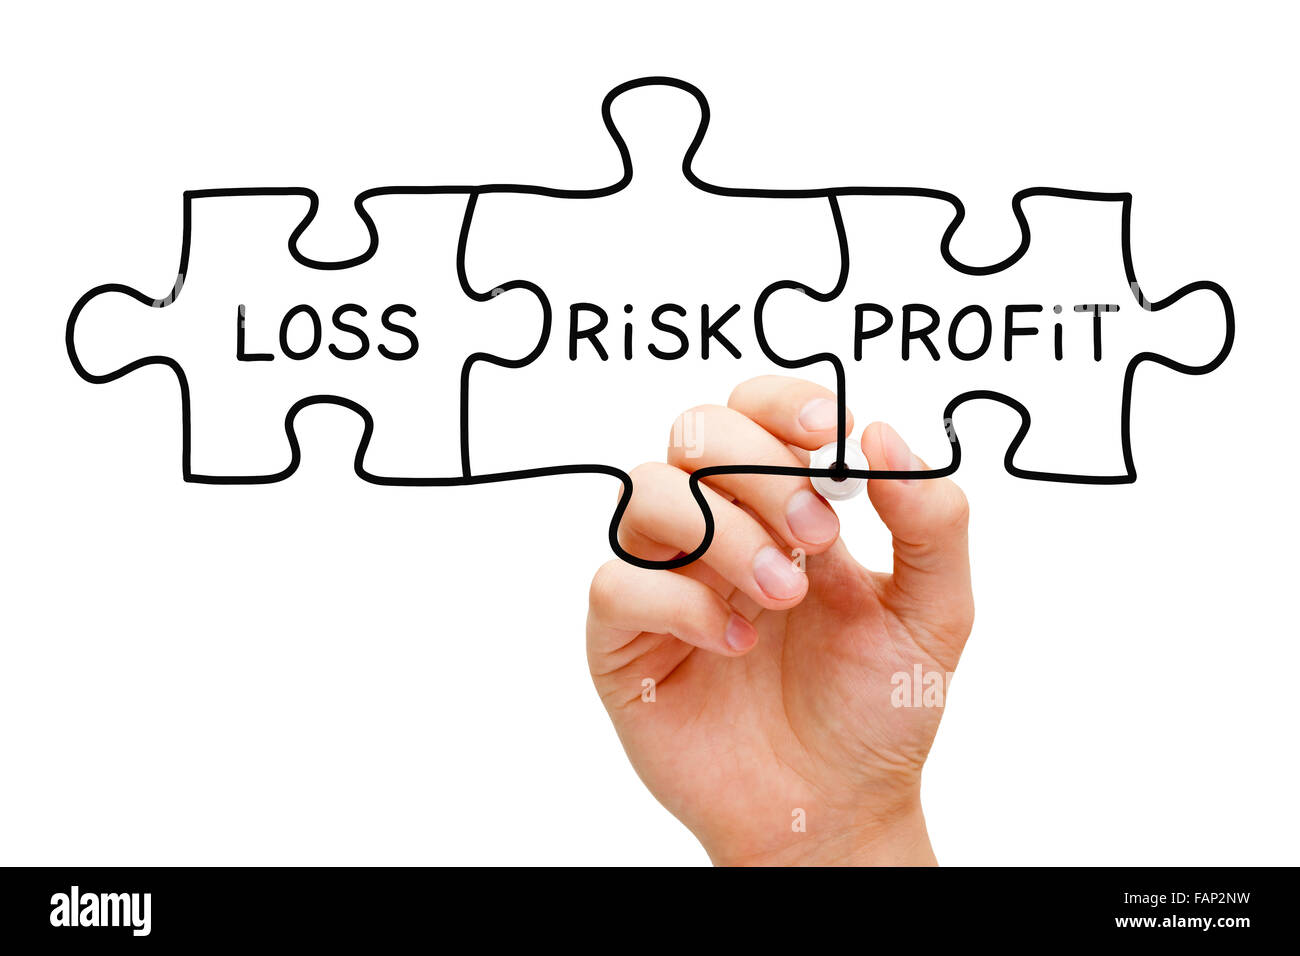 Risk Loss Profit Puzzle Concept Stock Photo